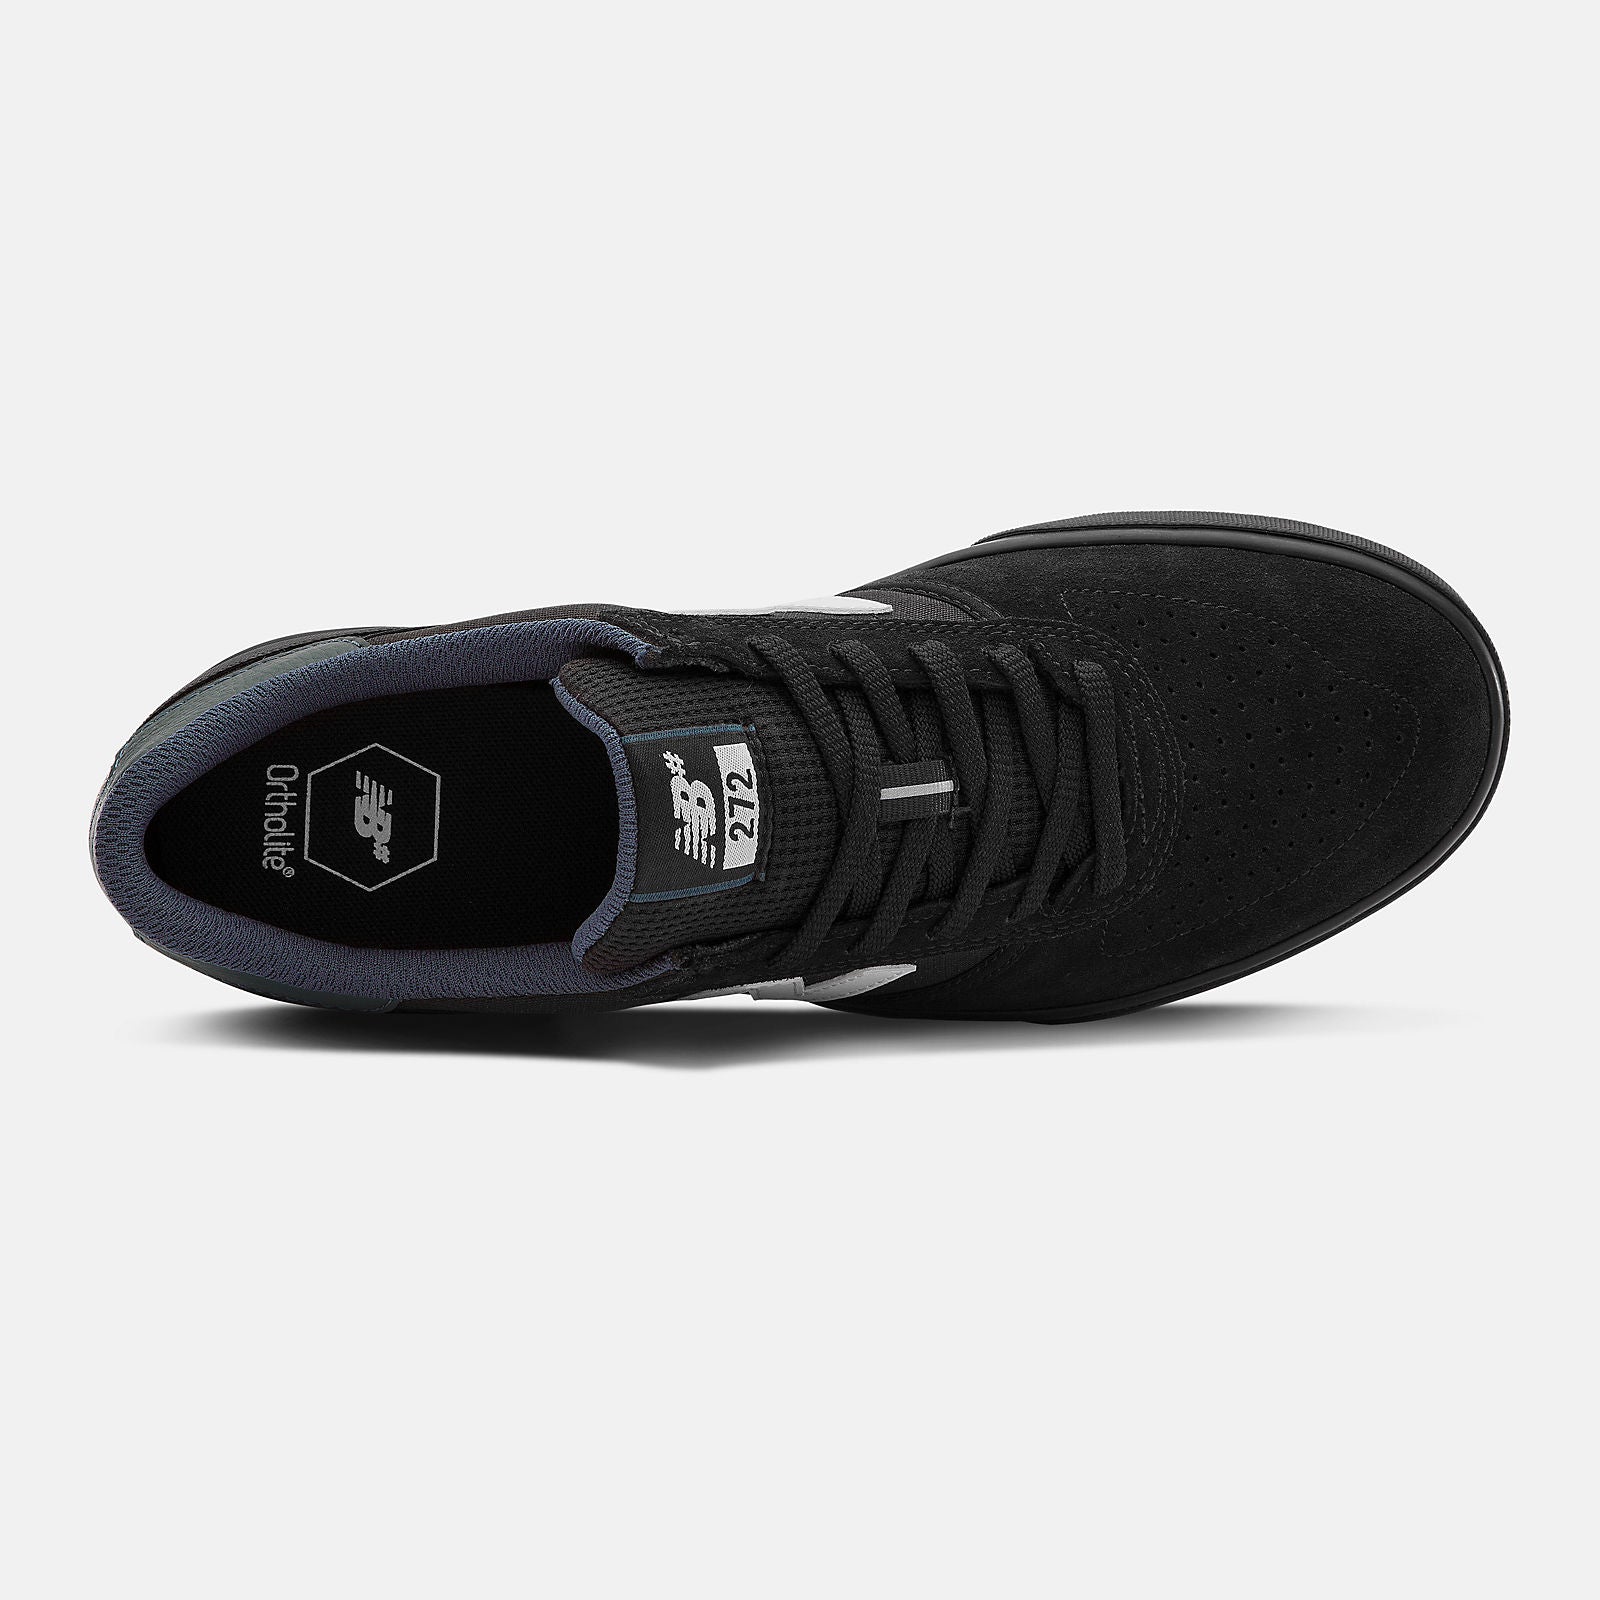 Black/White NM272 NB Numeric Skateboarding Shoe Top